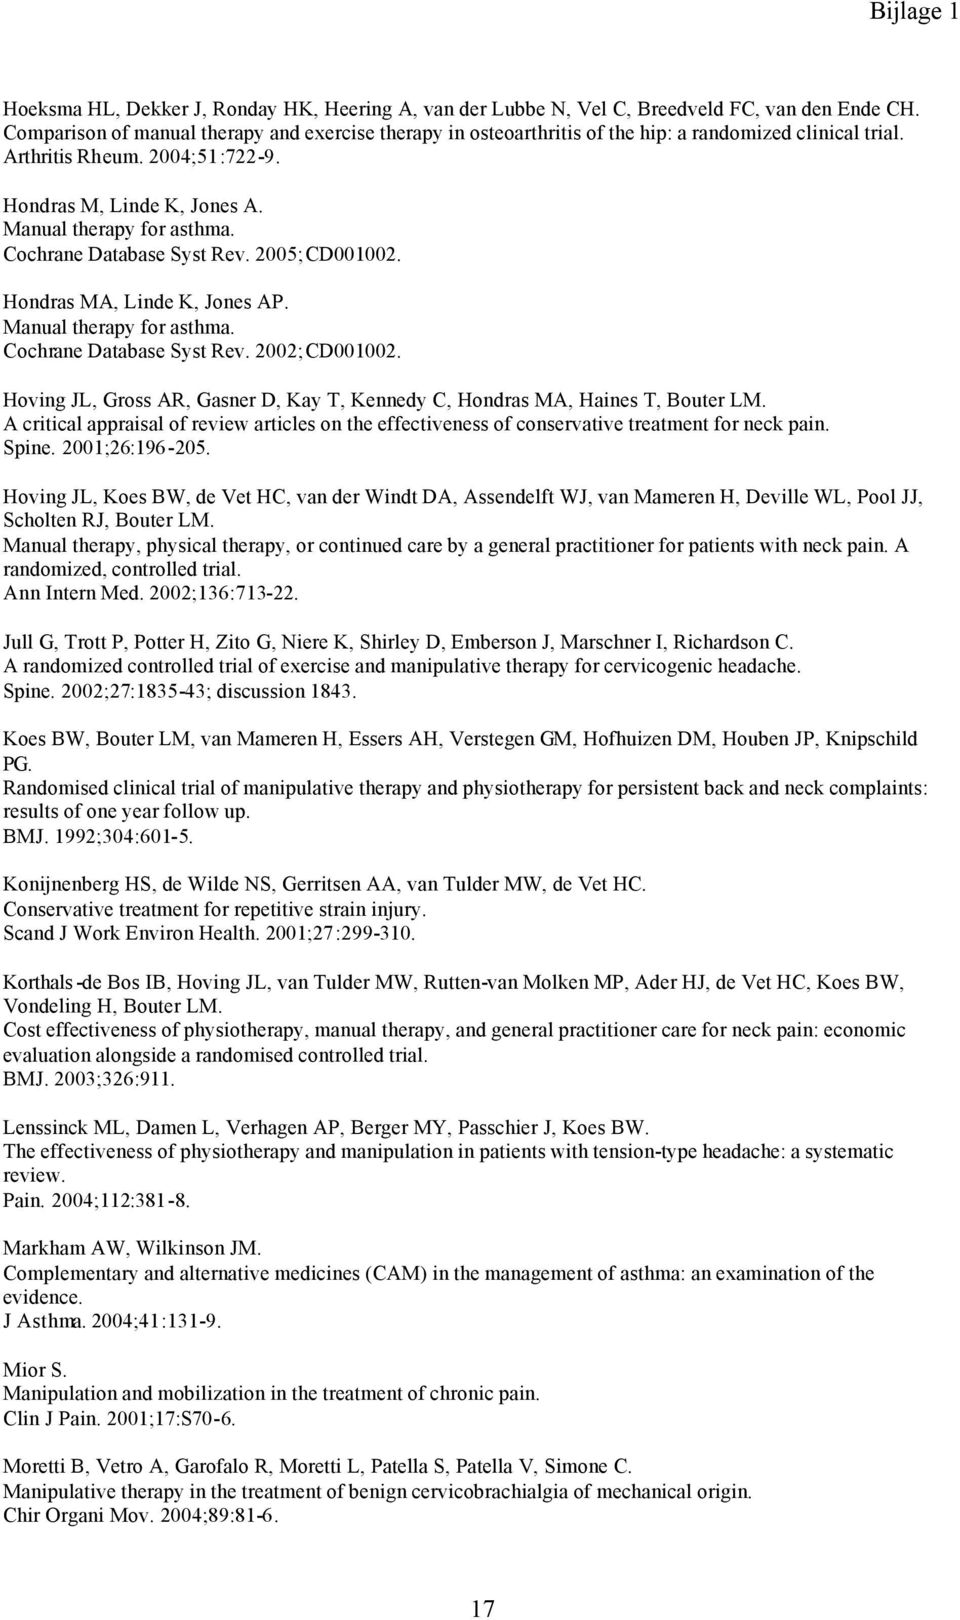 Cochrane Database Syst Rev. 2005;CD001002. Hondras MA, Linde K, Jones AP. Manual therapy for asthma. Cochrane Database Syst Rev. 2002;CD001002.